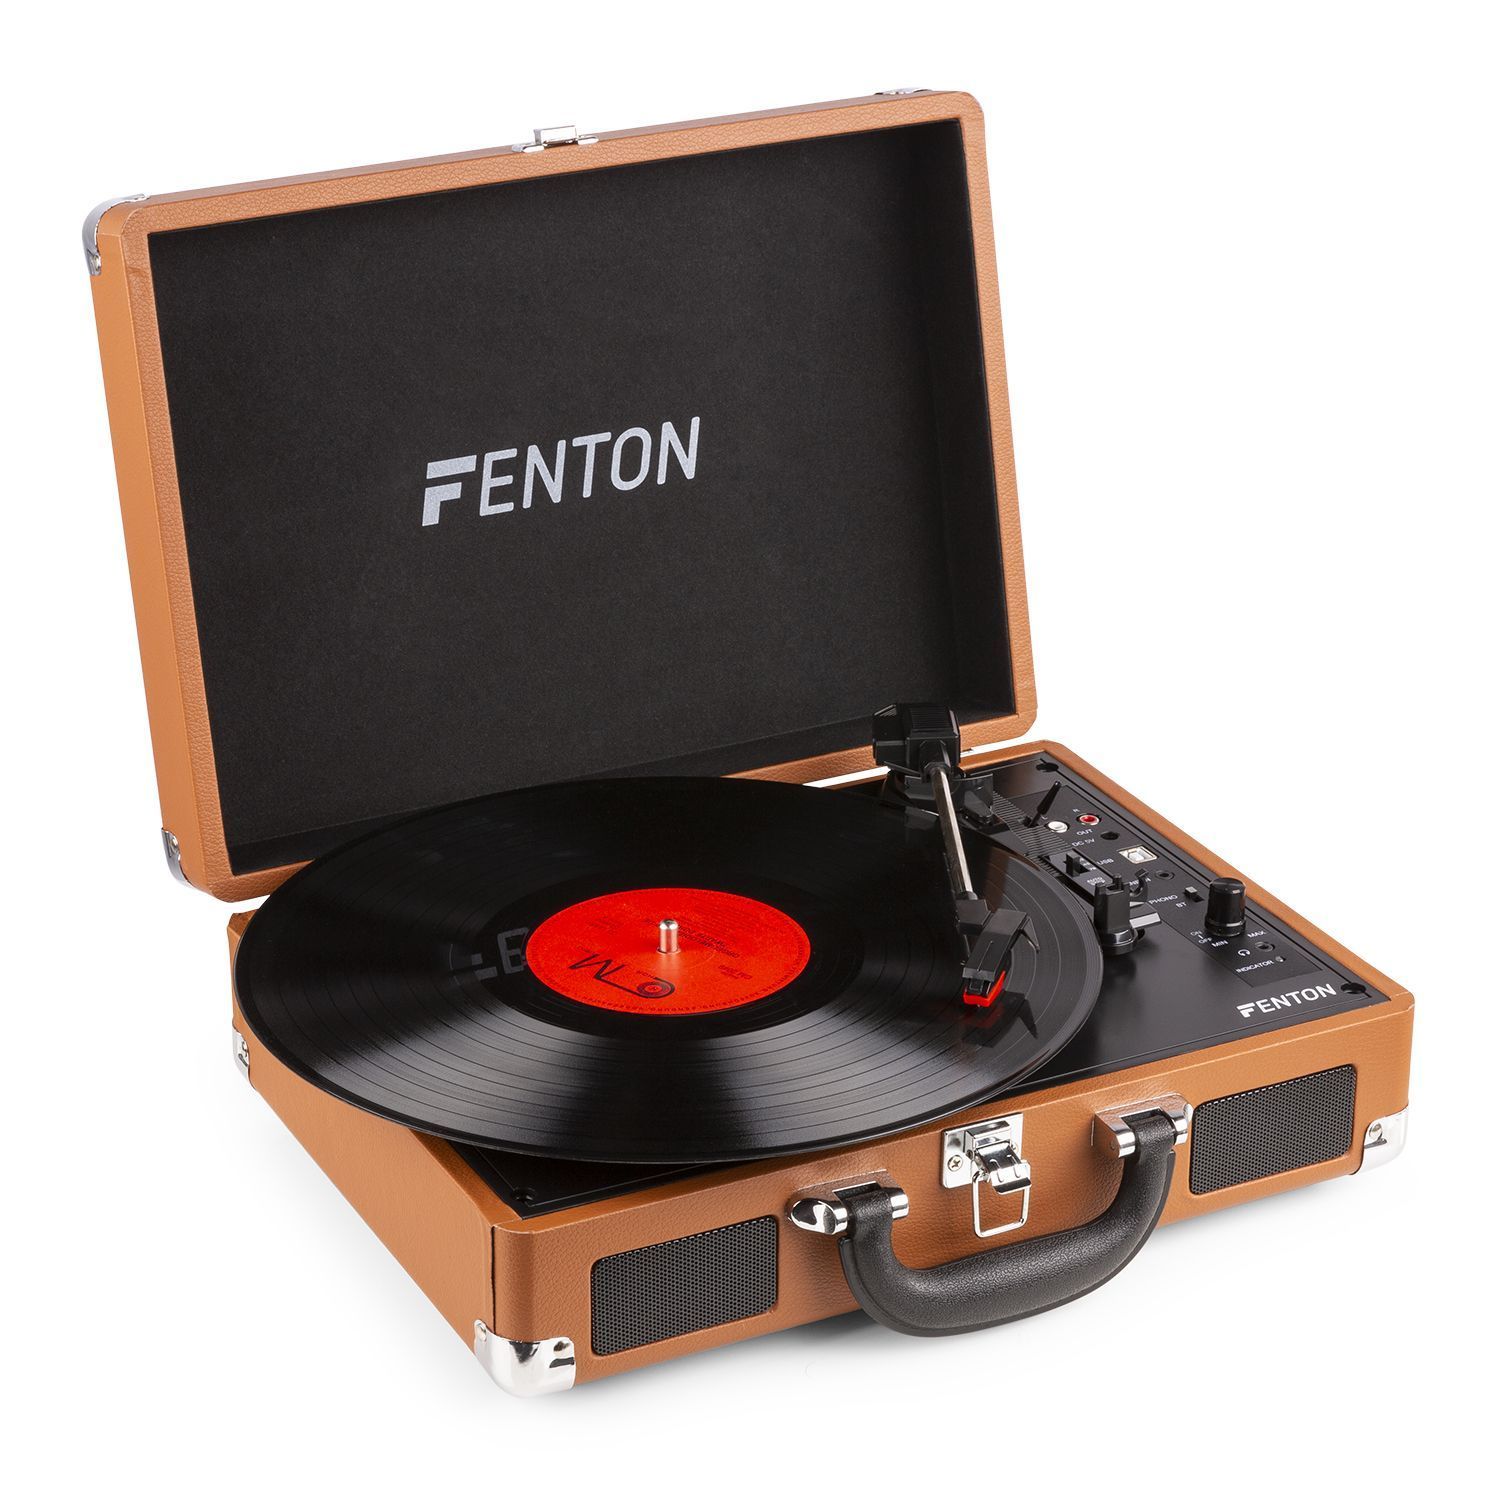 Fenton Retourdeal -  RP115F platenspeler met Bluetooth en USB - Bruin